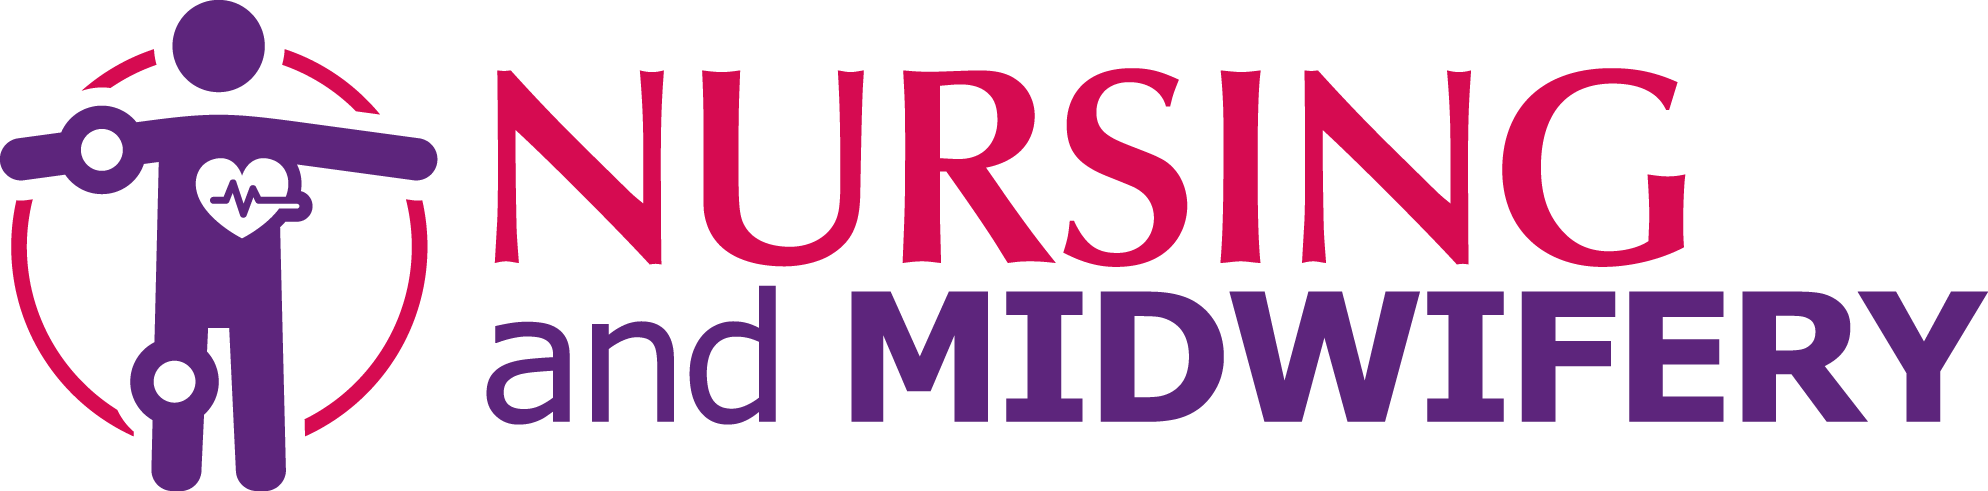 Nursing-and-Midwifery-logo-Final